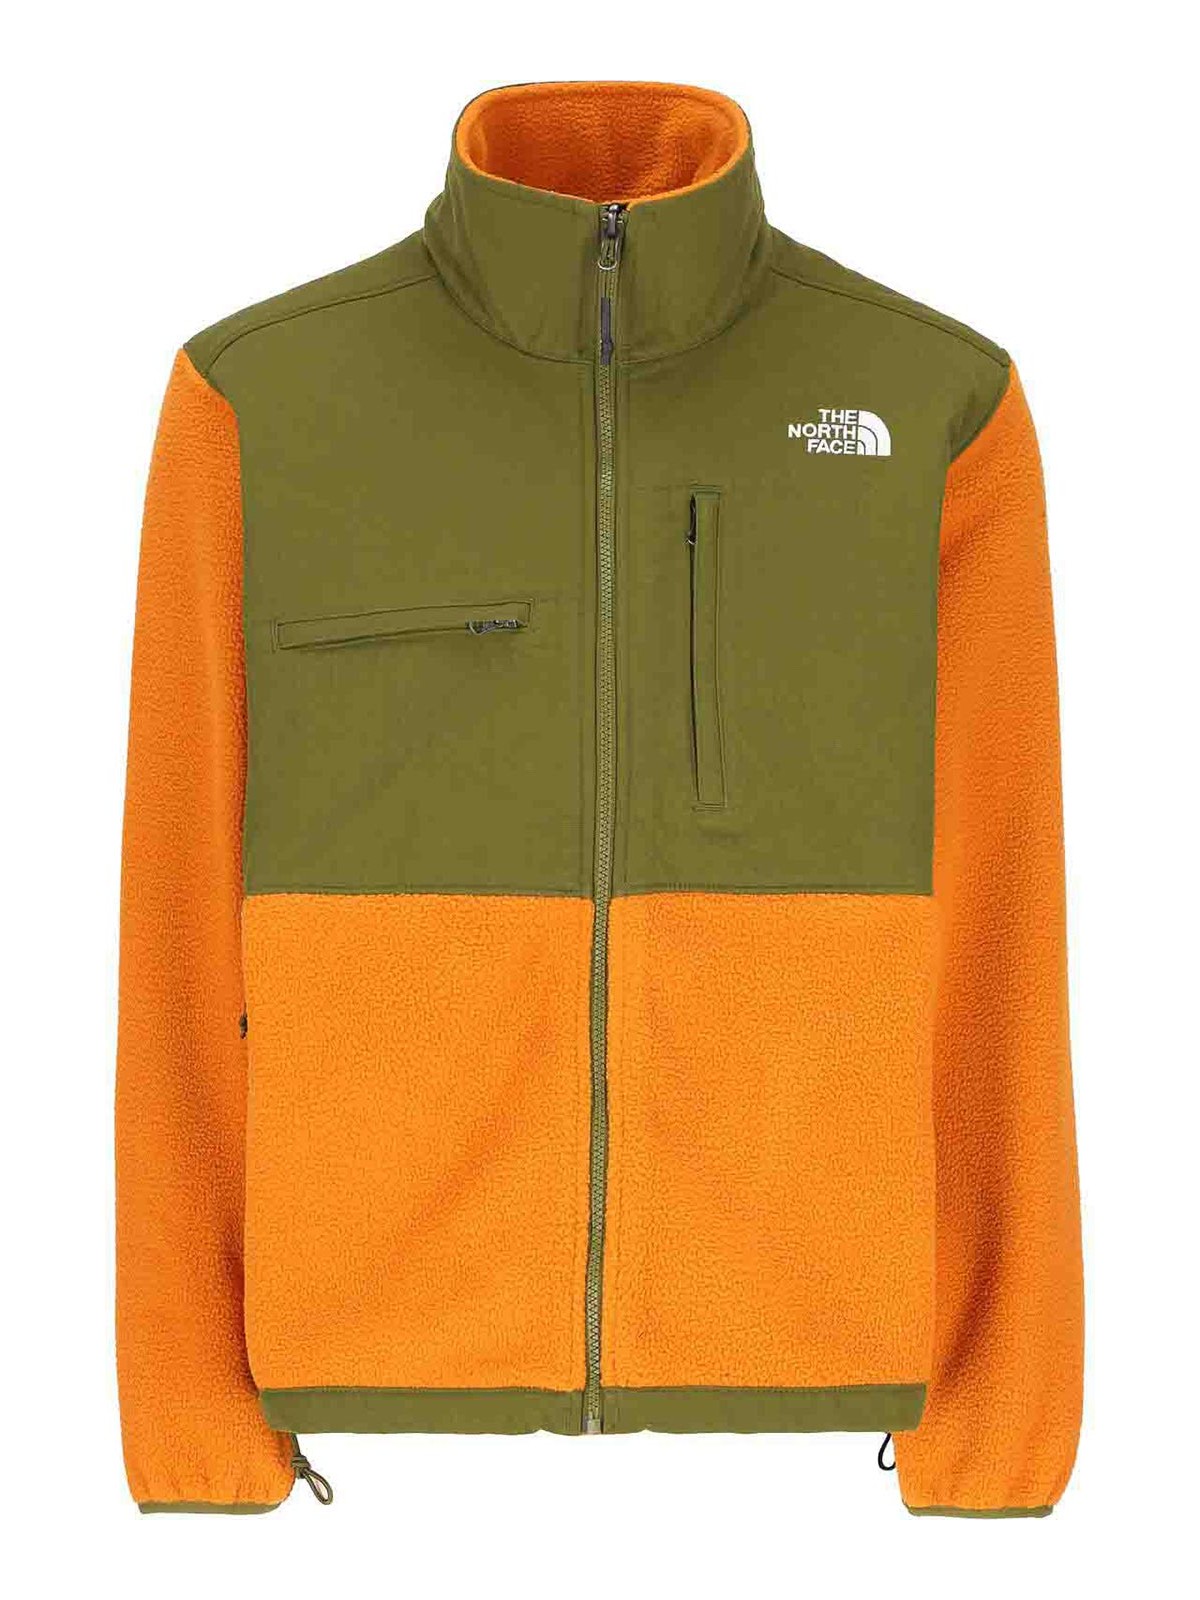 The North Face Denali Jacket In Orange